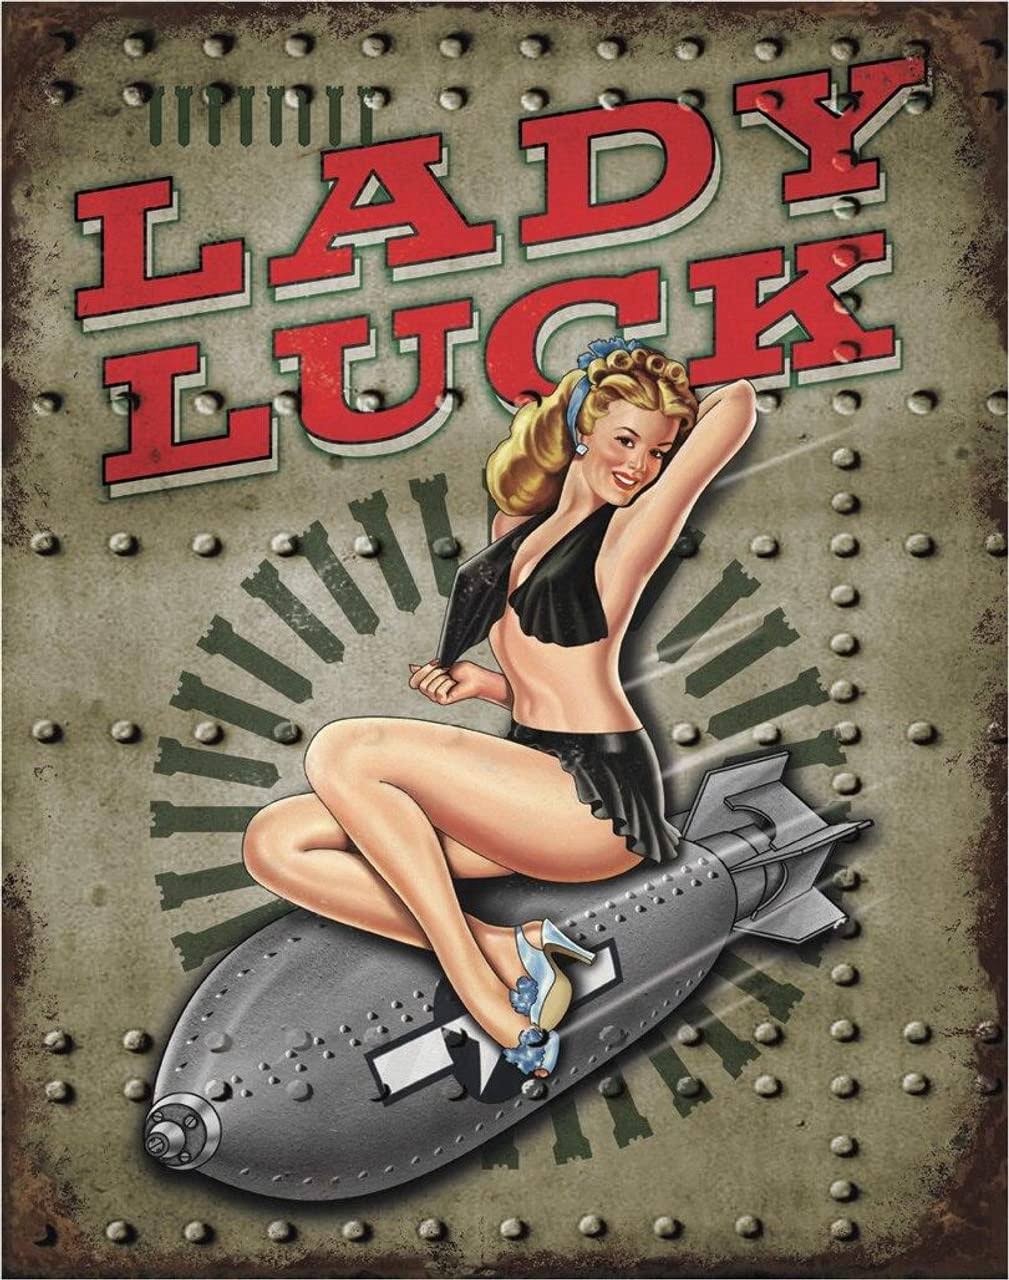 Desperate Enterprises Legends - Lady Luck Tin Sign - Nostalgic Vintage Metal Wall Decor - Made in USA